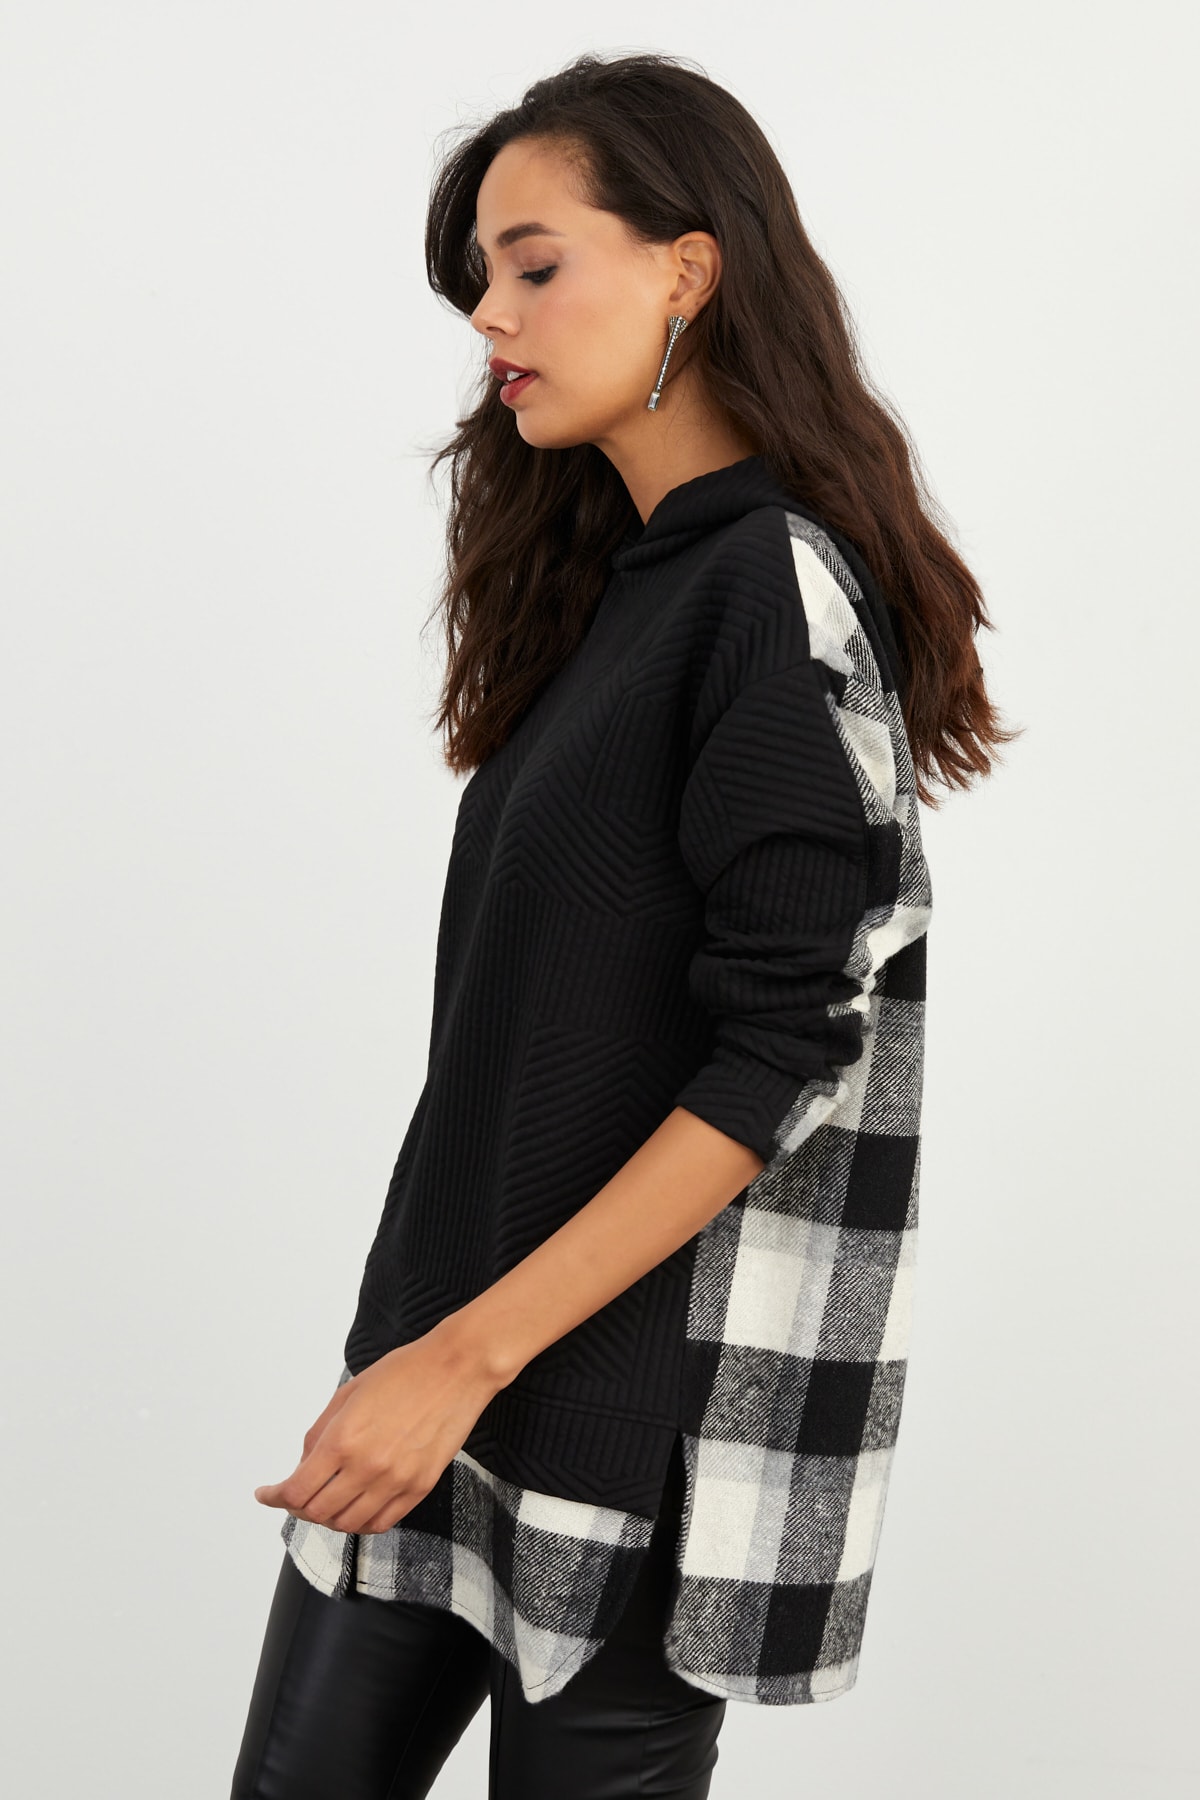 Cool & Sexy Women's Black Blocky Quilted Sweatshirt